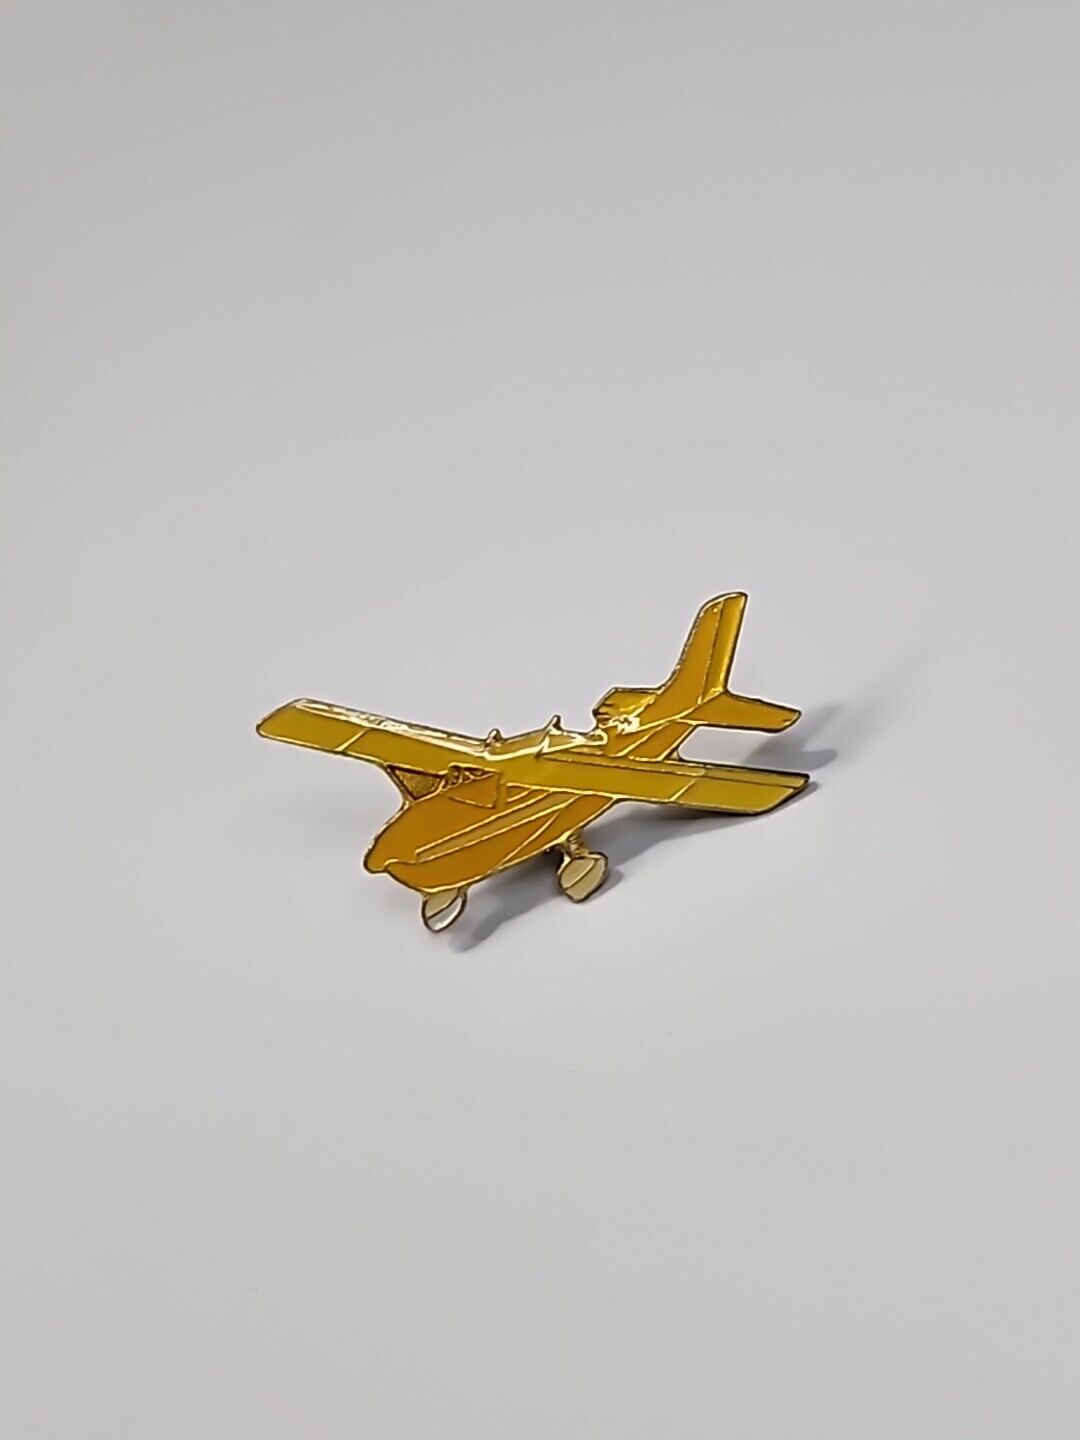 Cessna 172 Skyhawk Lapel Pin Single-Engine Aircraft Shades of Yellow Colors